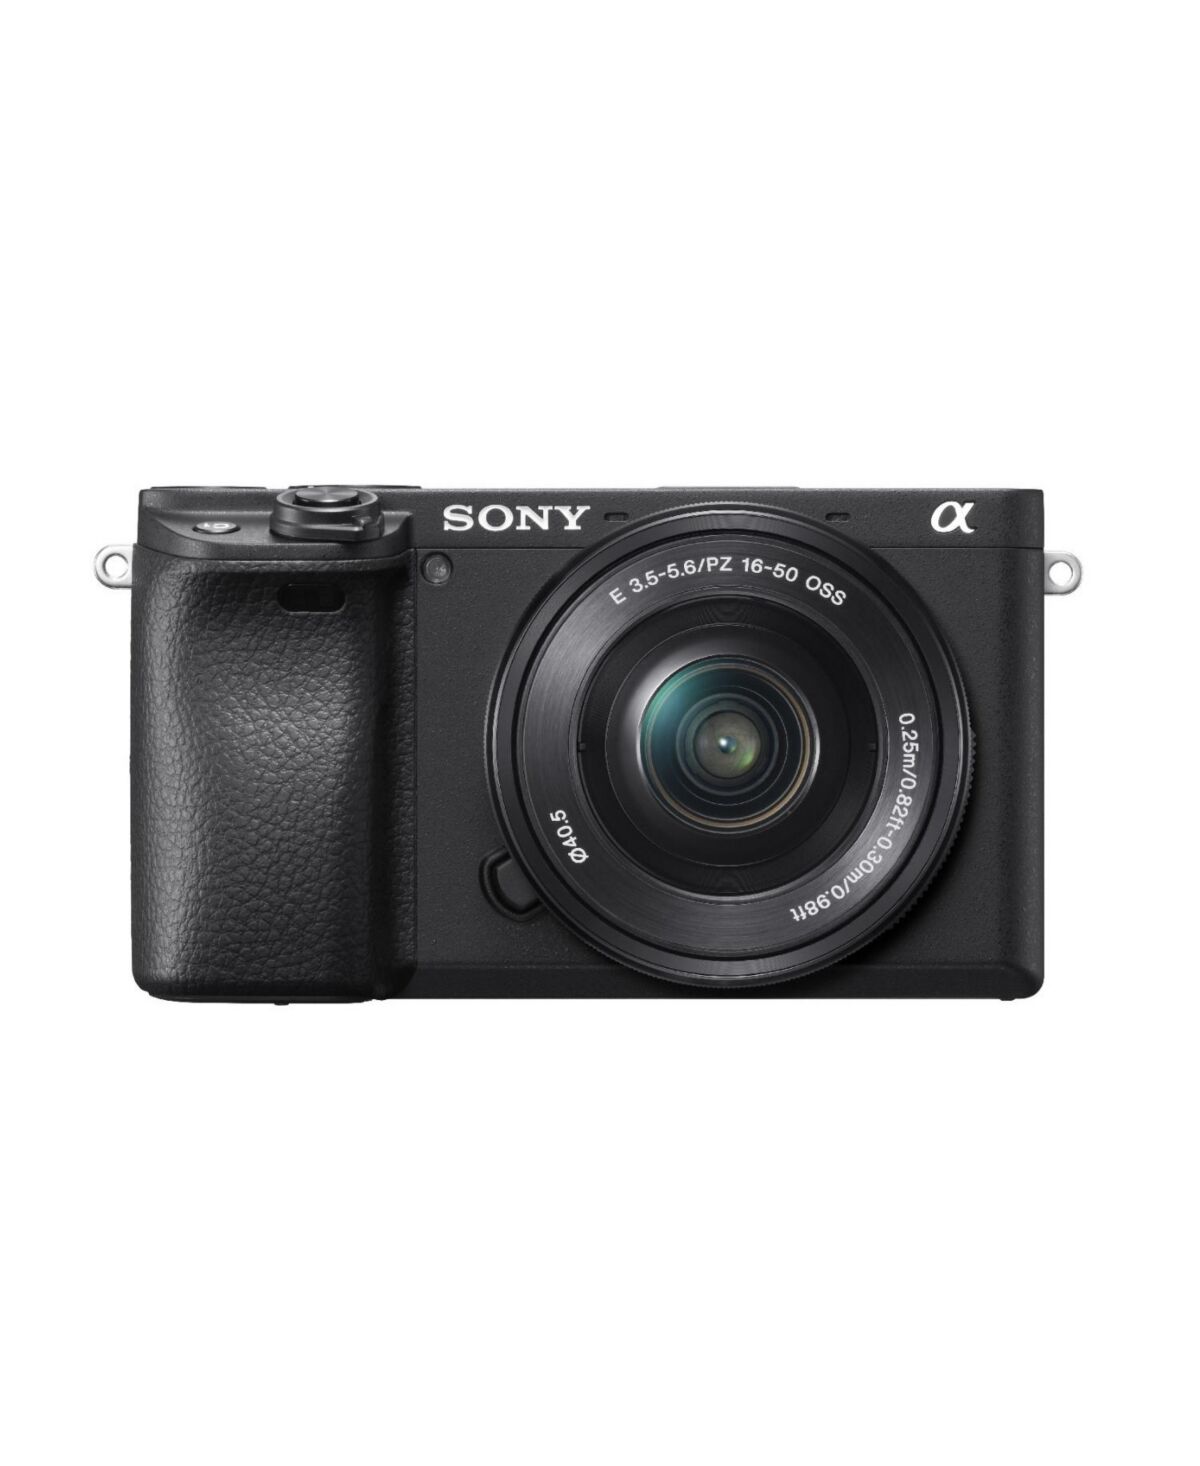 Sony Alpha a6400 Mirror less Digital Camera with 16-50mm Lens (Black) - Black